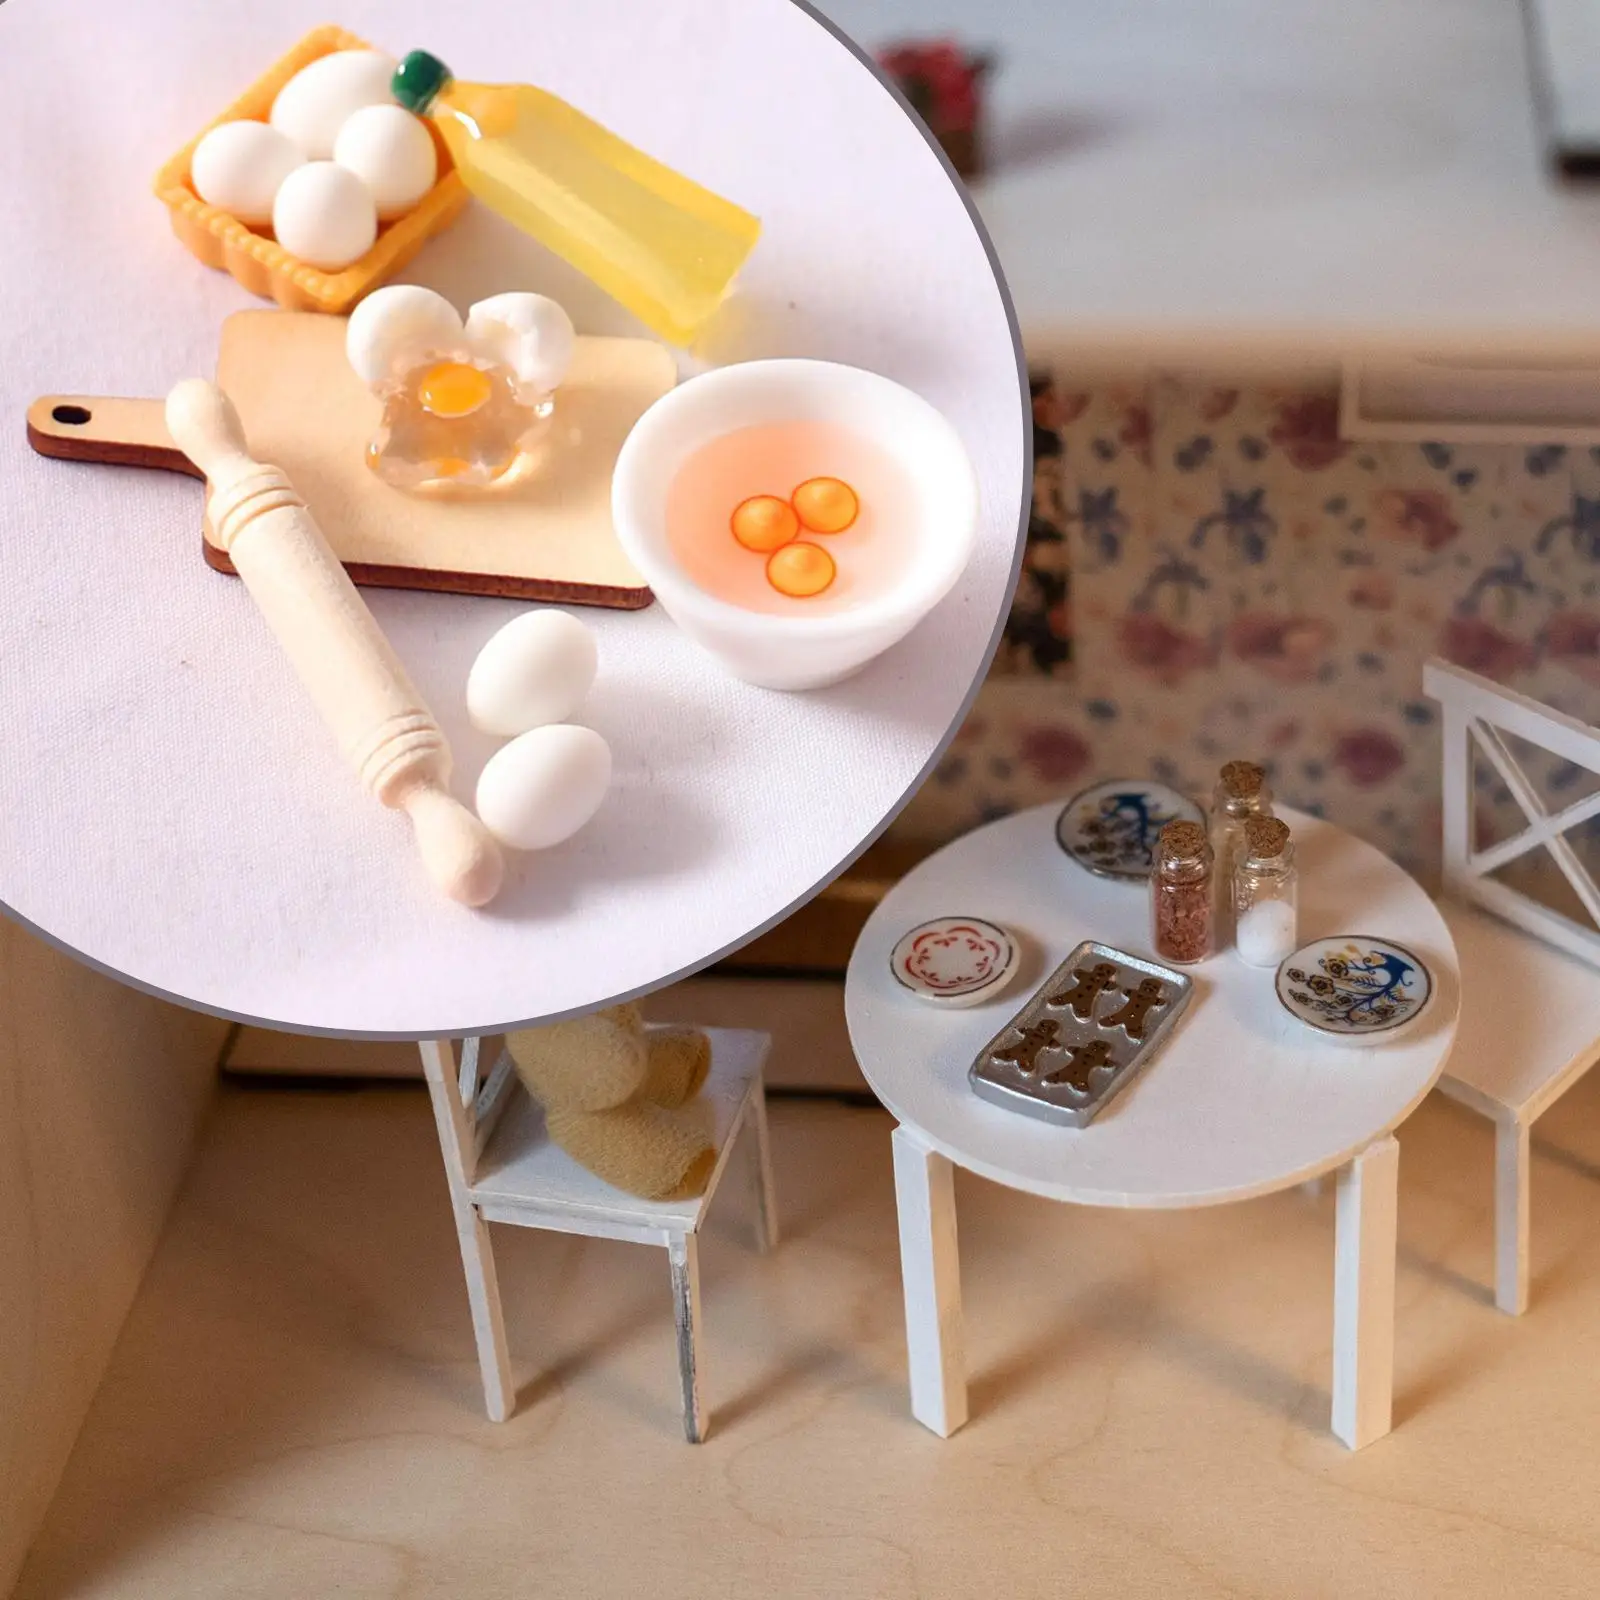 9 Pieces Dollhouse Baking Set Bakery Decoration Miniature Food Toy Supplies